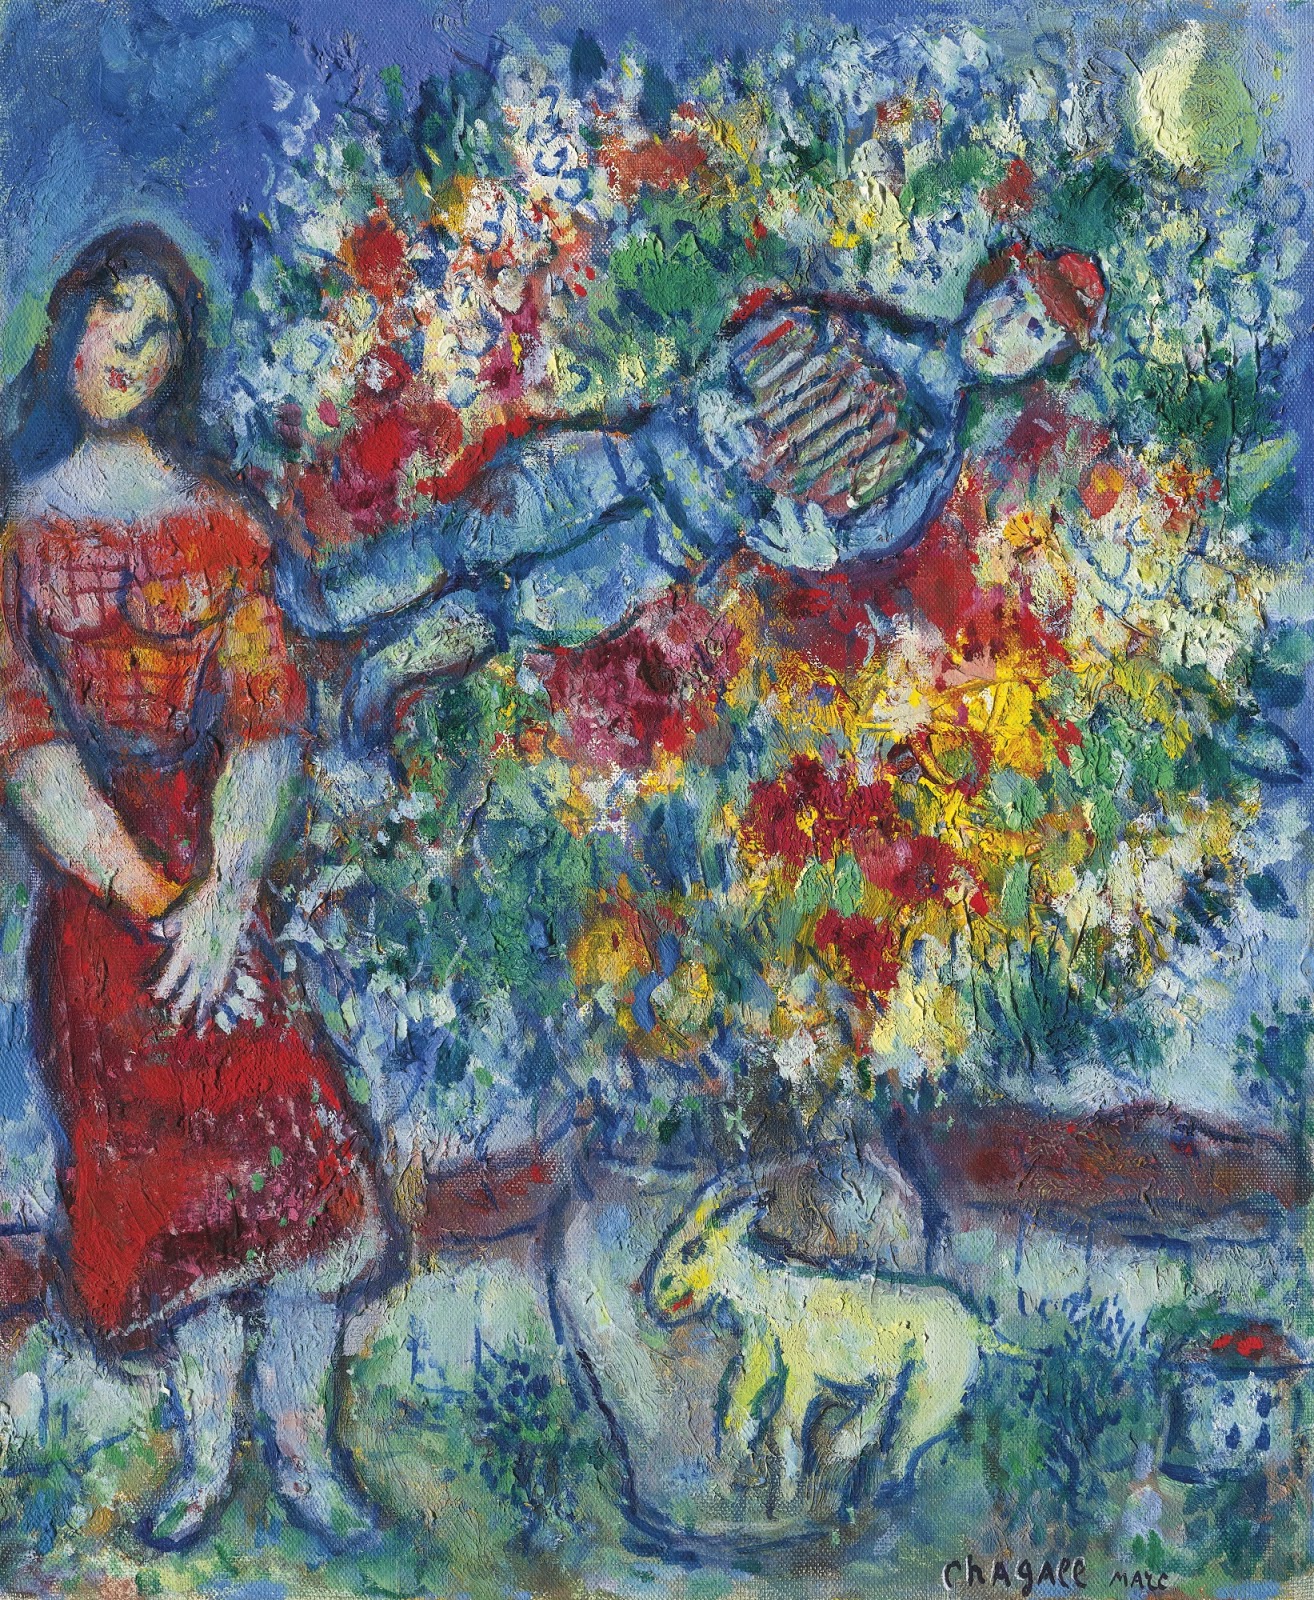 Marc+Chagall-1887-1985 (386).jpg